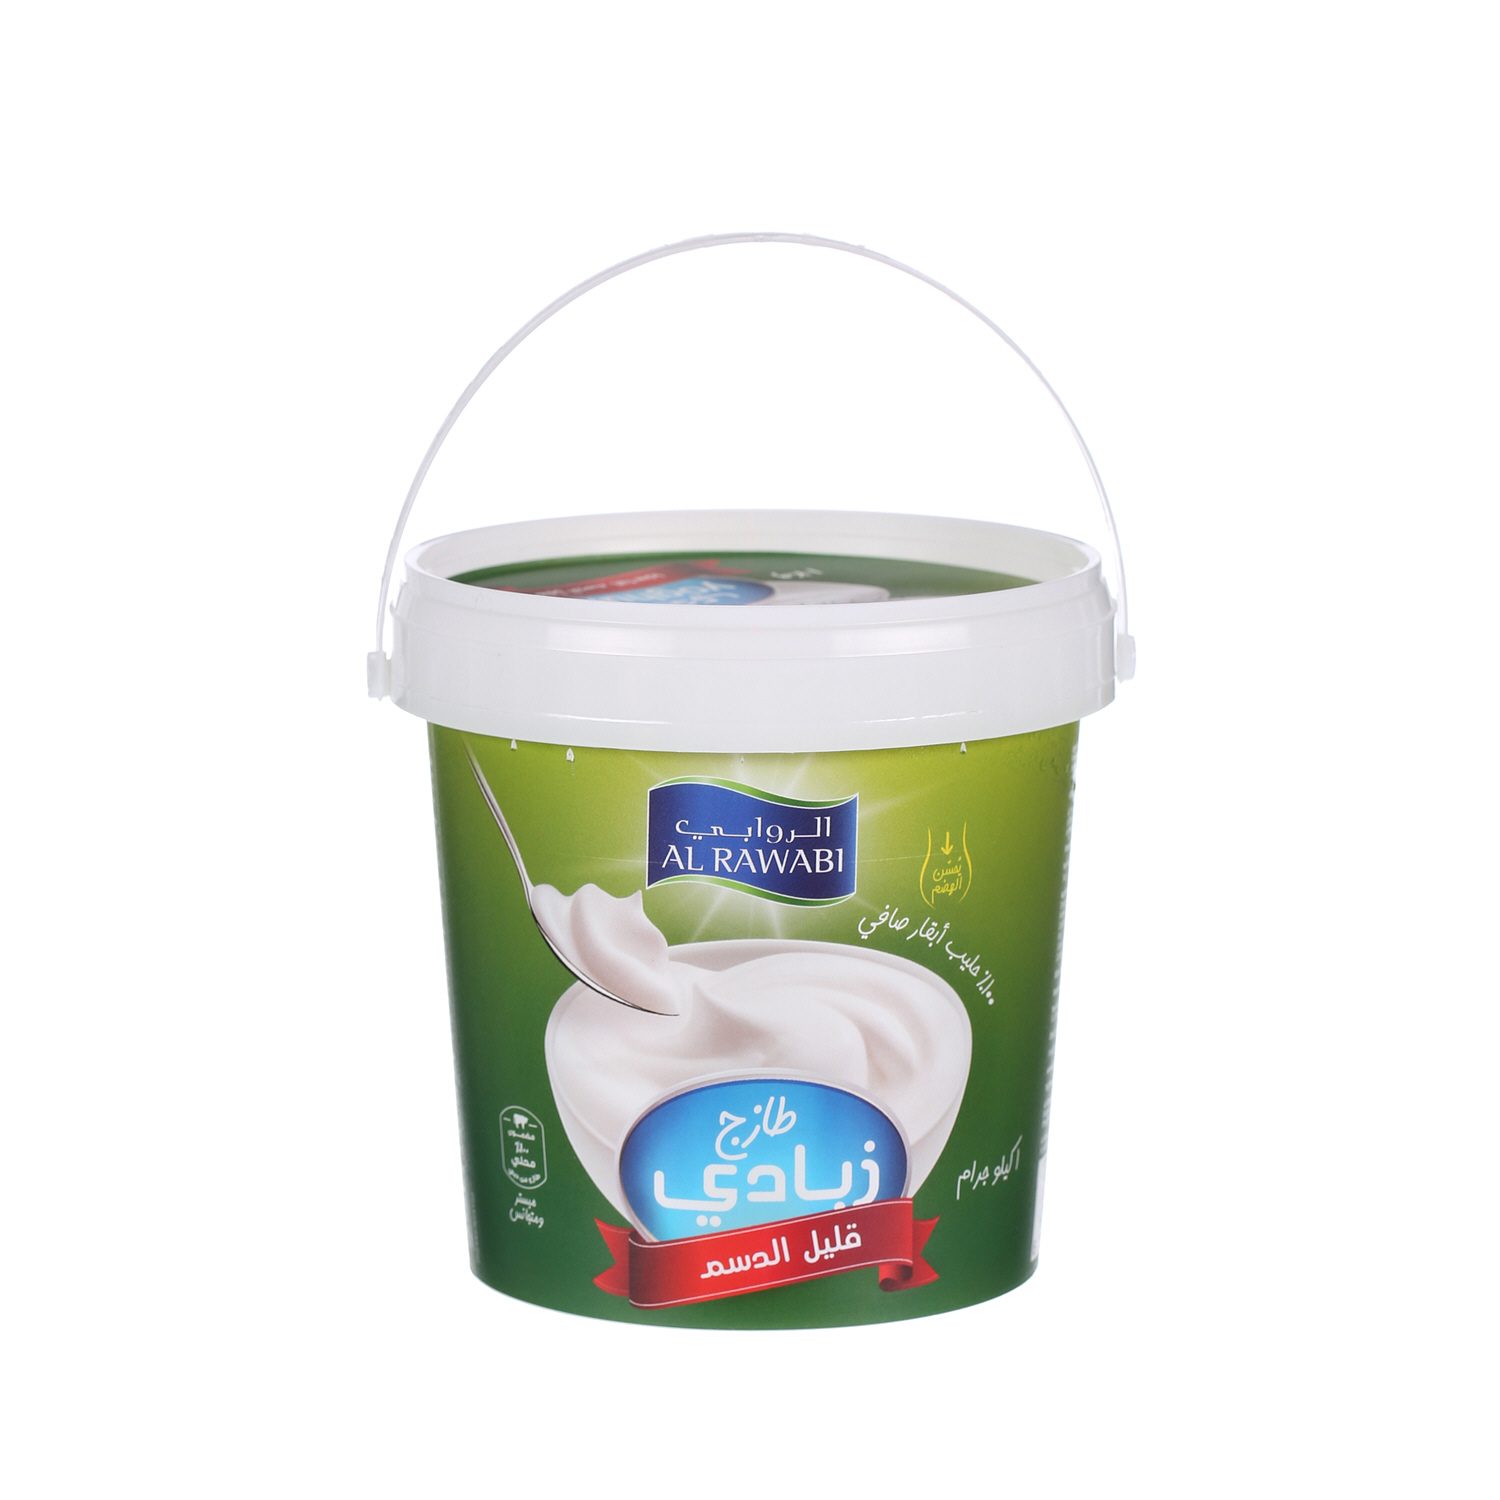 Al Rawabi Fresh Yoghurt Low Fat 1Kg